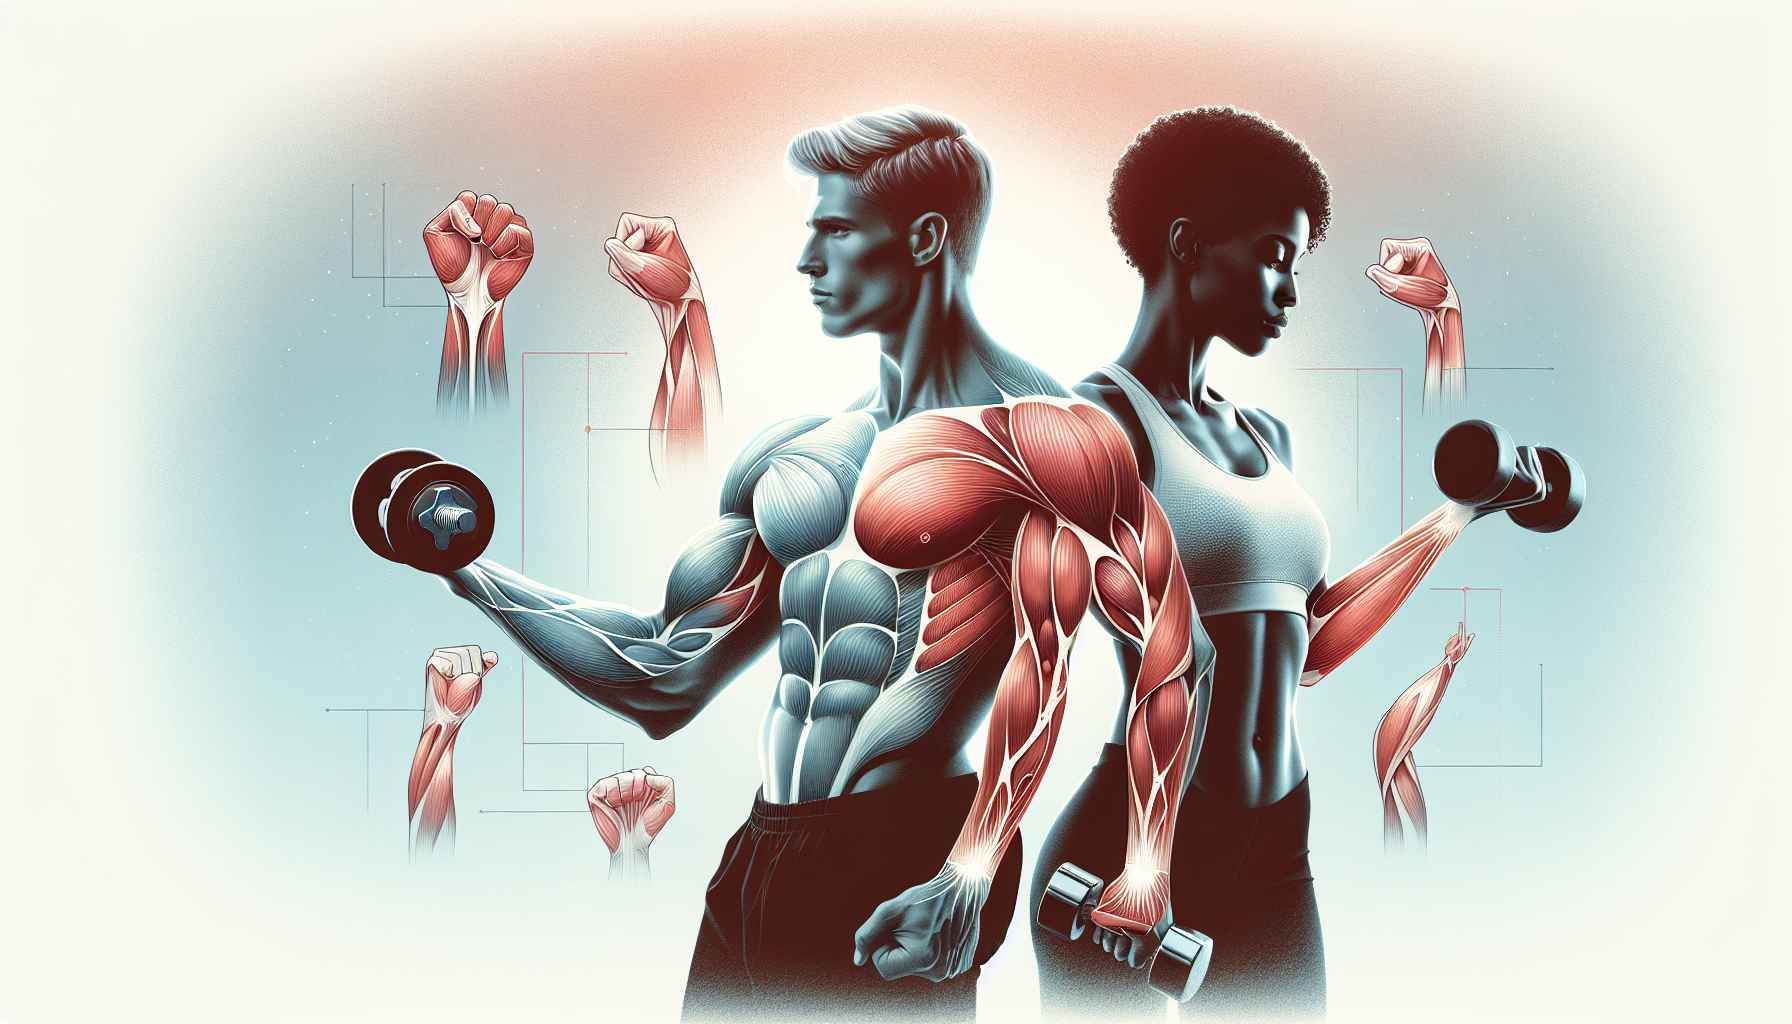 Tudo Sobre Bíceps e Tríceps: Técnicas e Segredos para Crescimento Muscular